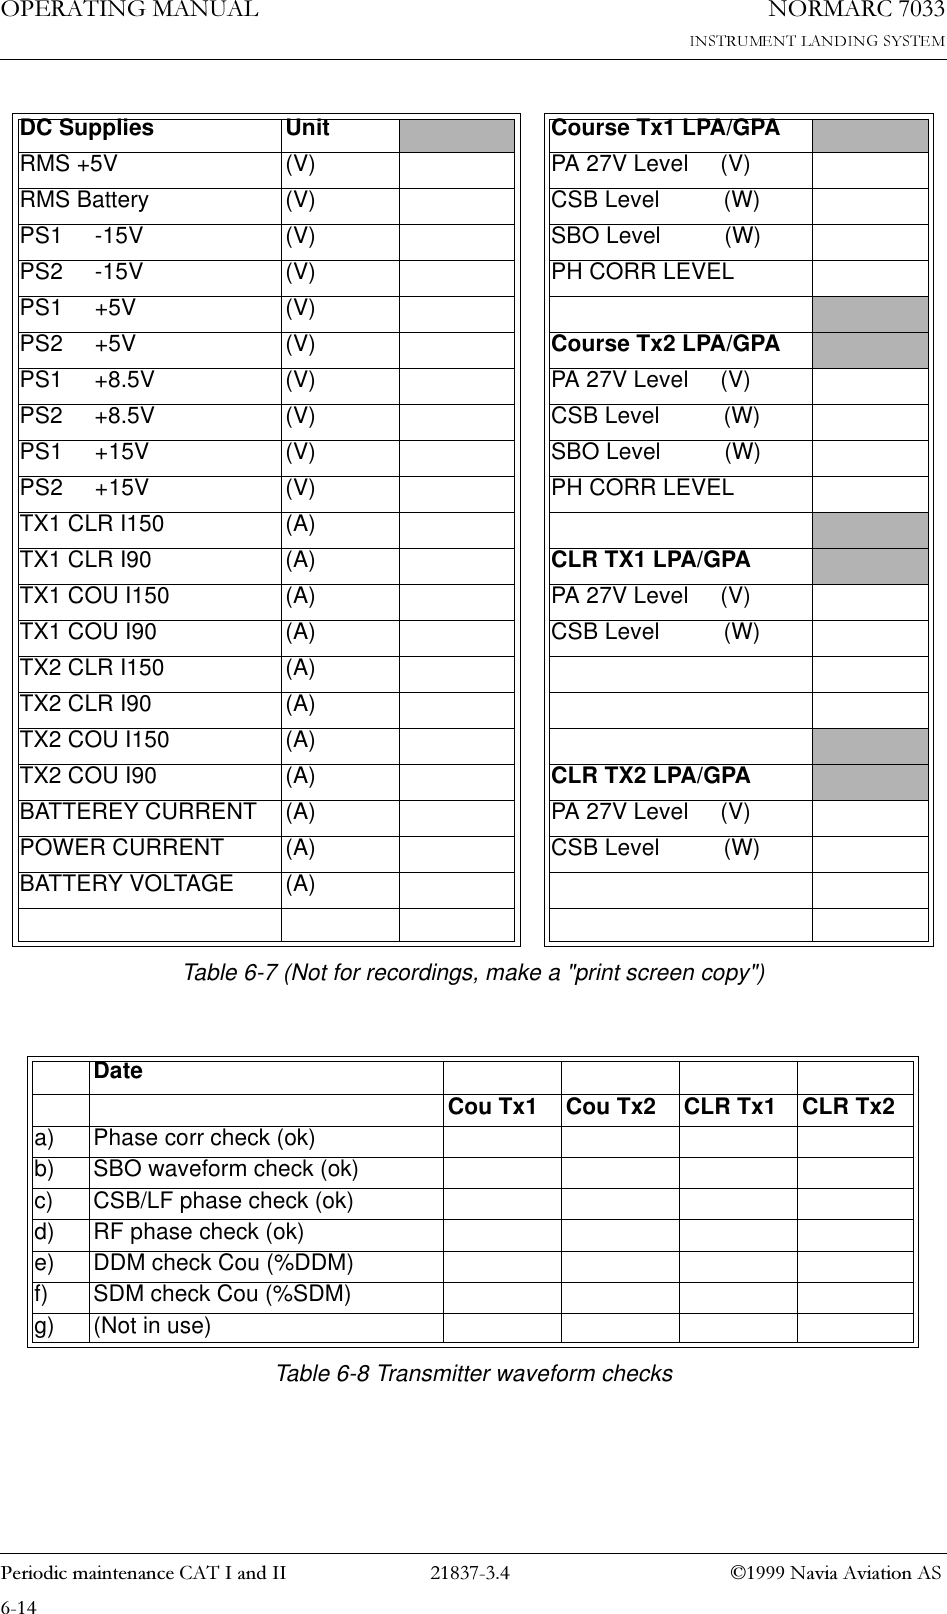 23(5$7,1*0$18$/1250$5&amp;3HULRGLFPDLQWHQDQFH&amp;$7,DQG,, 1DYLD$YLDWLRQ$6Table 6-7 (Not for recordings, make a &quot;print screen copy&quot;)Table 6-8 Transmitter waveform checksDC Supplies Unit Course Tx1 LPA/GPARMS +5V (V) PA 27V Level     (V)RMS Battery (V) CSB Level          (W)PS1     -15V (V) SBO Level          (W)PS2     -15V (V) PH CORR LEVELPS1     +5V (V)PS2     +5V (V) Course Tx2 LPA/GPAPS1     +8.5V (V) PA 27V Level     (V)PS2     +8.5V (V) CSB Level          (W)PS1     +15V (V) SBO Level          (W)PS2     +15V (V) PH CORR LEVELTX1 CLR I150 (A)TX1 CLR I90 (A) CLR TX1 LPA/GPATX1 COU I150 (A) PA 27V Level     (V)TX1 COU I90 (A) CSB Level          (W)TX2 CLR I150 (A)TX2 CLR I90 (A)TX2 COU I150 (A)TX2 COU I90 (A) CLR TX2 LPA/GPABATTEREY CURRENT (A) PA 27V Level     (V)POWER CURRENT (A) CSB Level          (W)BATTERY VOLTAGE (A)DateCou Tx1 Cou Tx2 CLR Tx1 CLR Tx2a) Phase corr check (ok)b) SBO waveform check (ok)c) CSB/LF phase check (ok)d) RF phase check (ok)e) DDM check Cou (%DDM)f) SDM check Cou (%SDM)g) (Not in use)